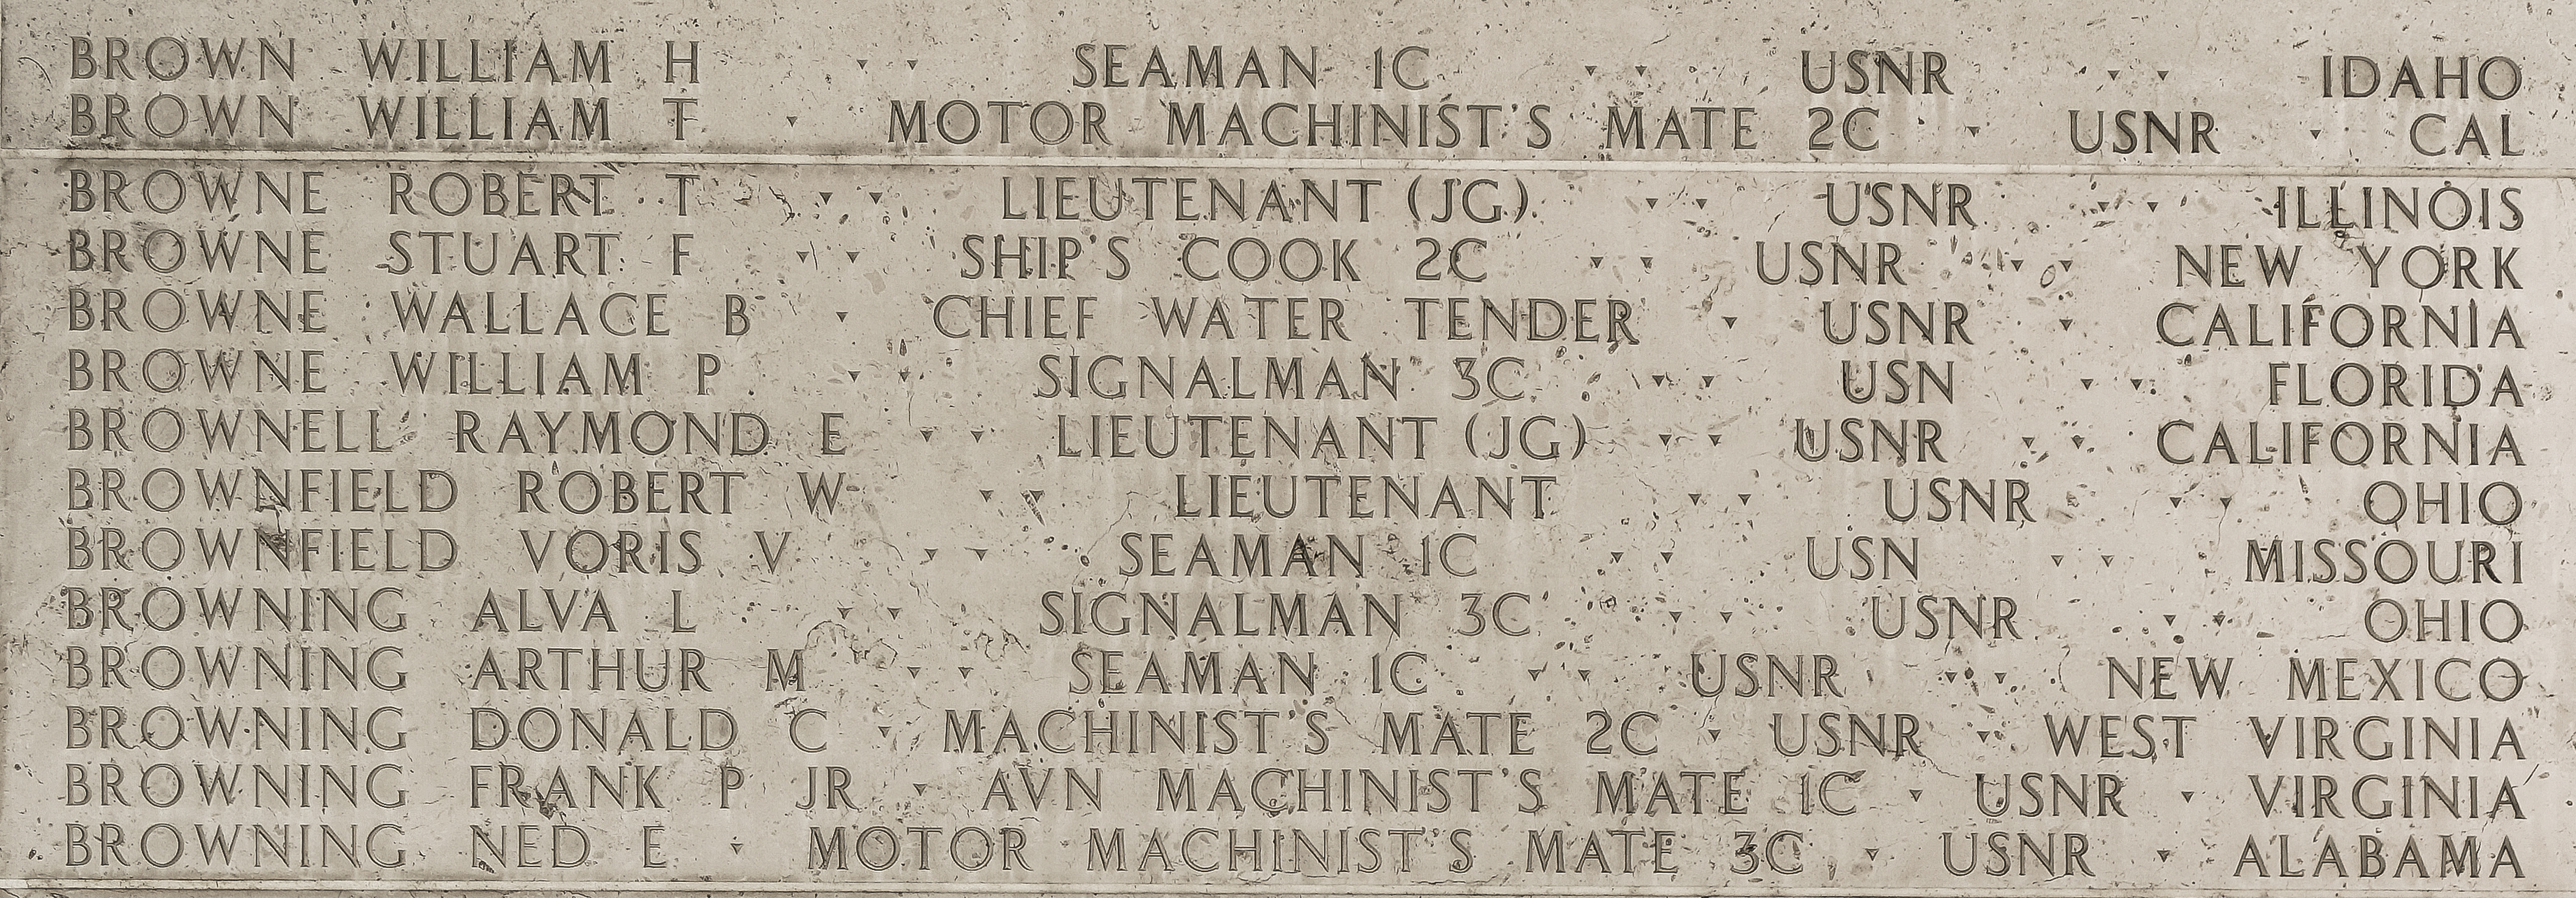 William T. Brown, Motor Machinist's Mate Second Class